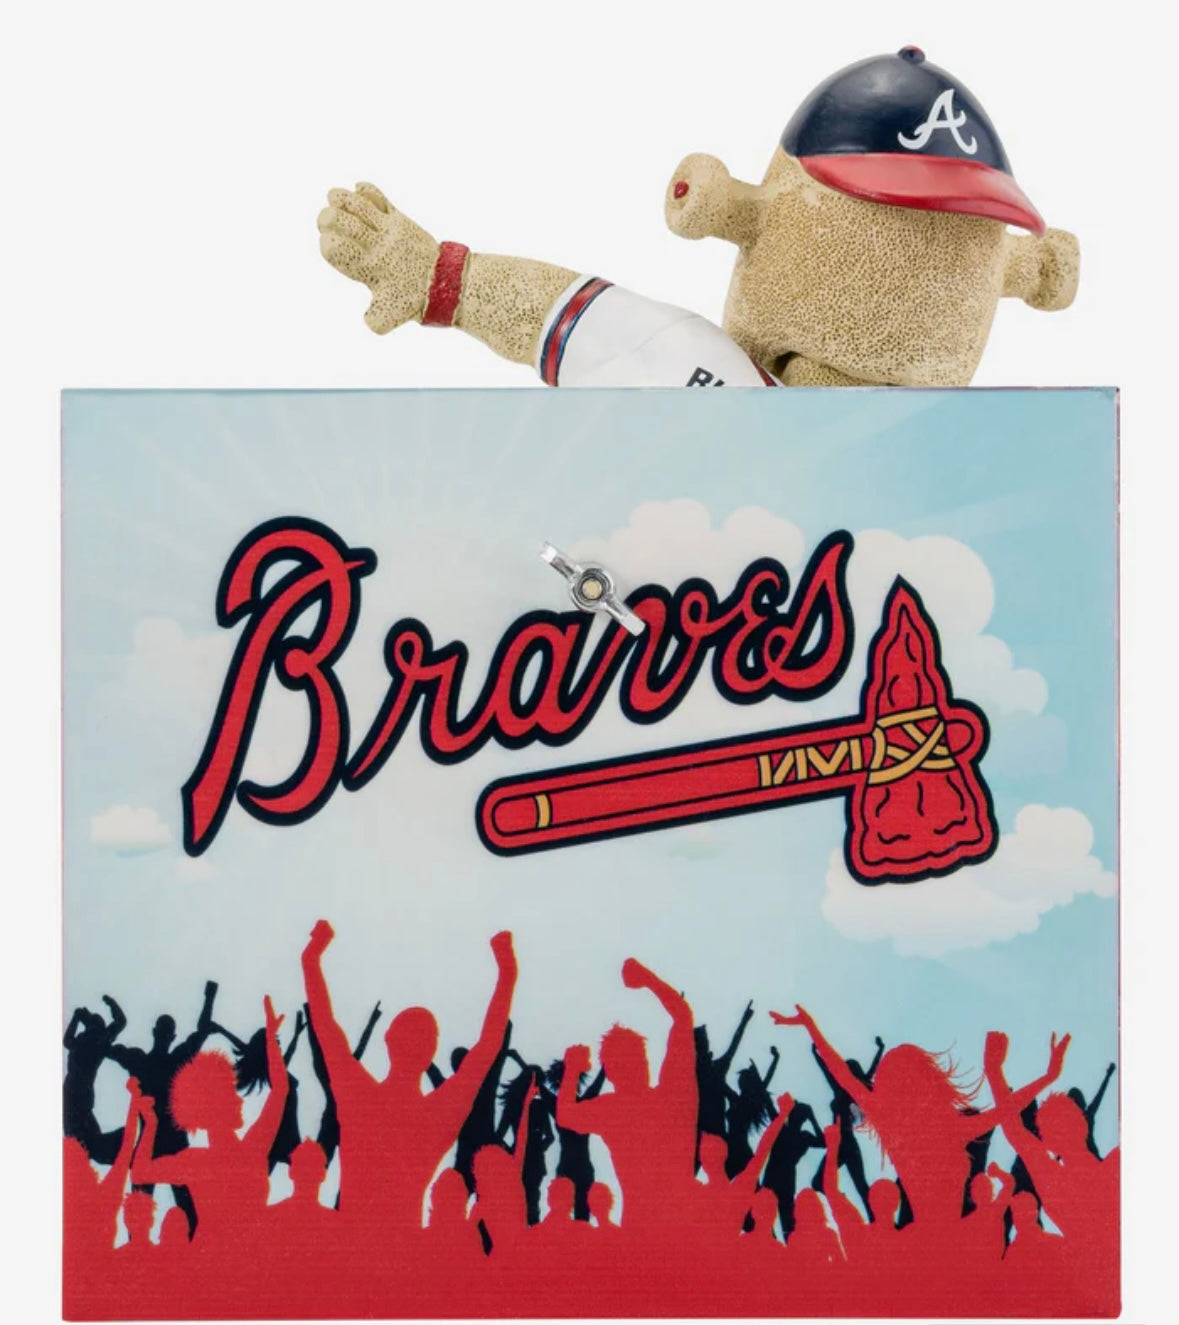 Blooper Atlanta Braves Thanksgiving Mascot Bobblehead – Atlanta